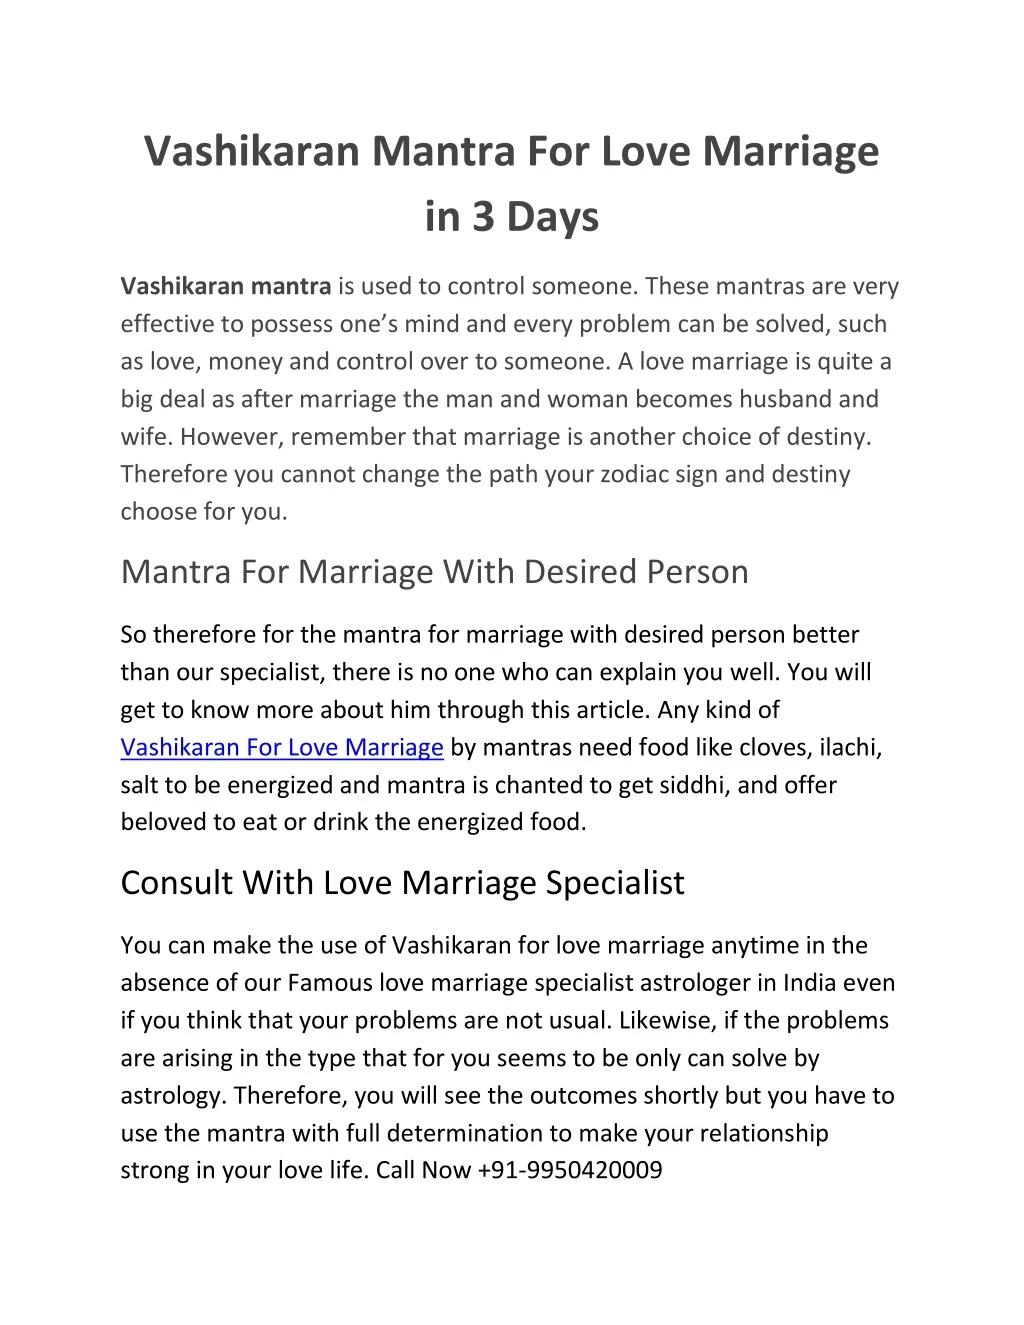 vashikaran mantra for love marriage in 3 days